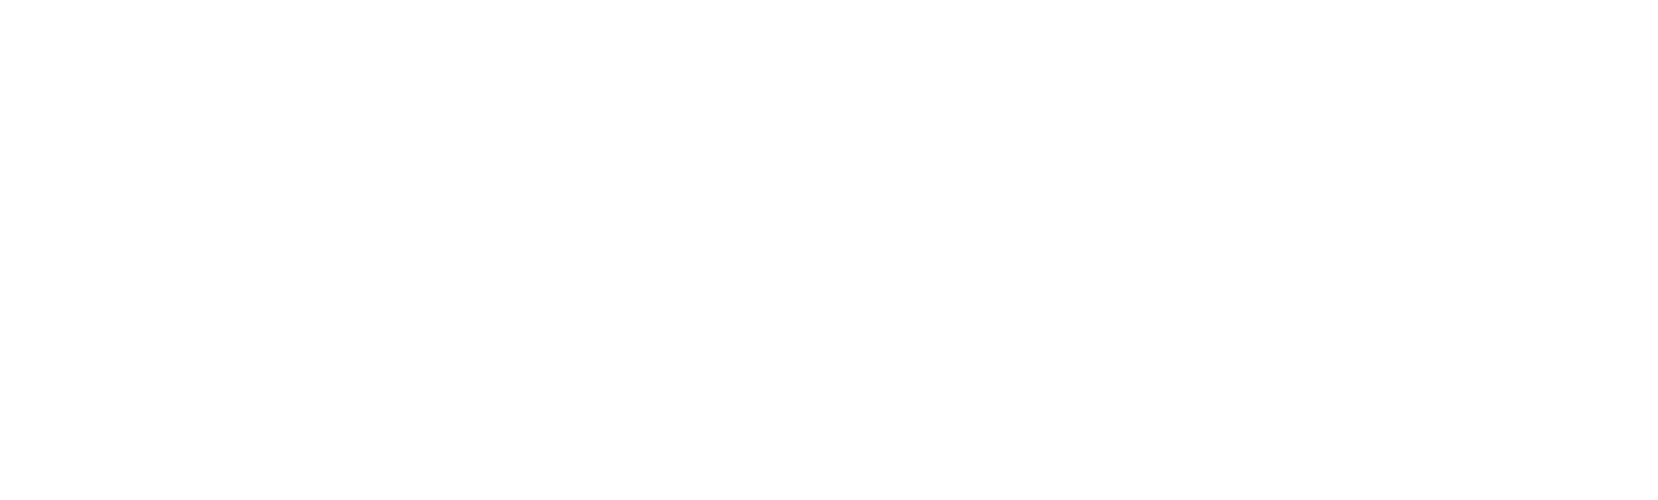 vitafyren feed butyric